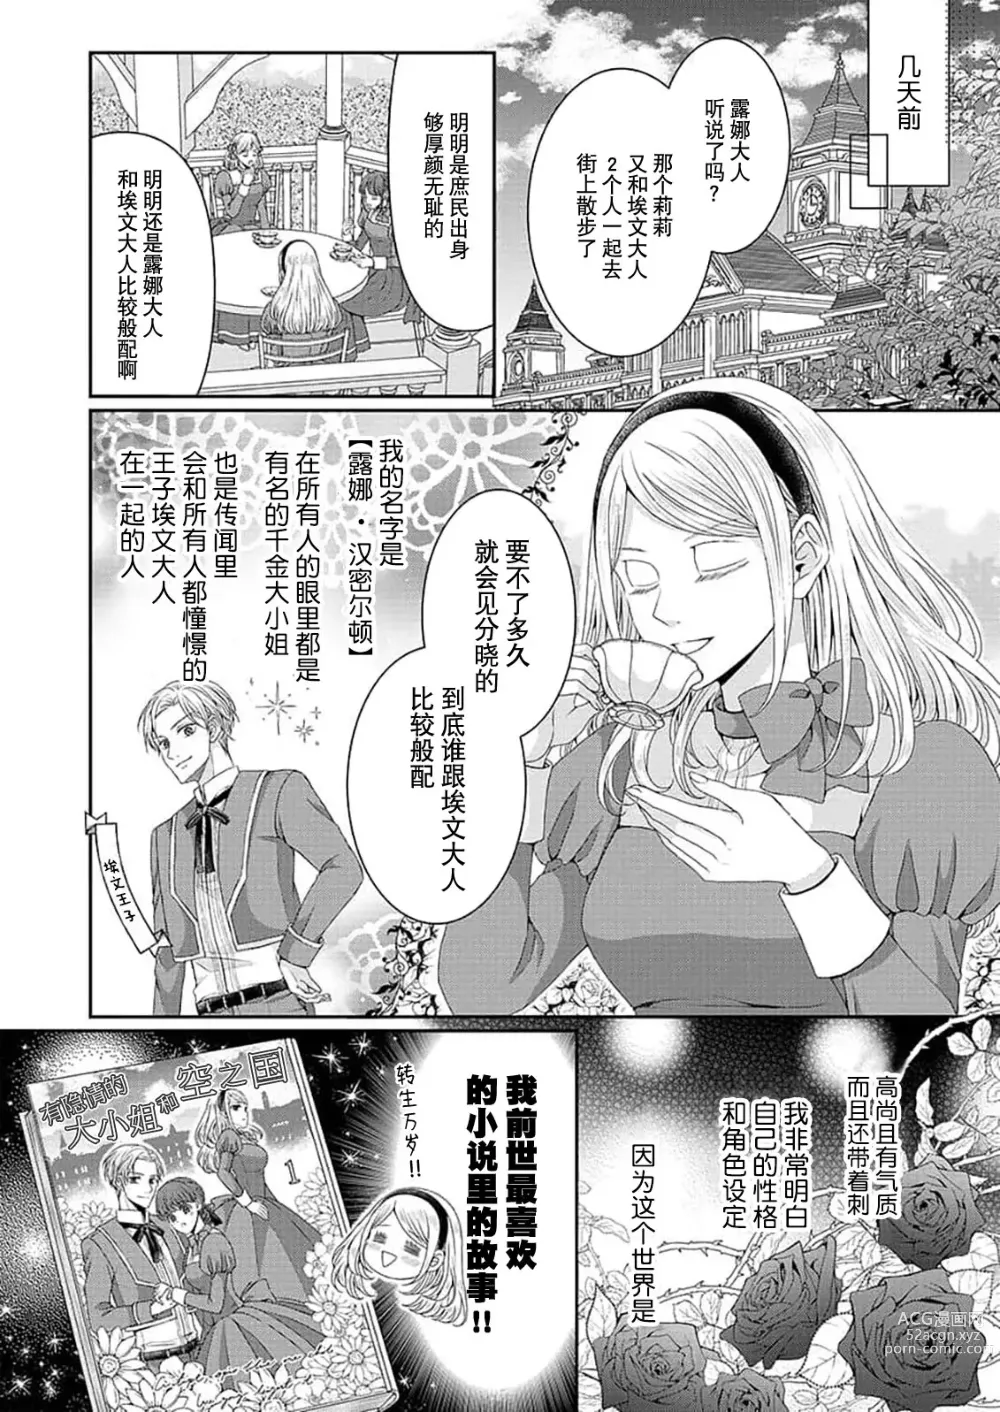 Page 4 of manga 然后你会自投罗网~冷酷王子甜蜜狡猾的陷阱